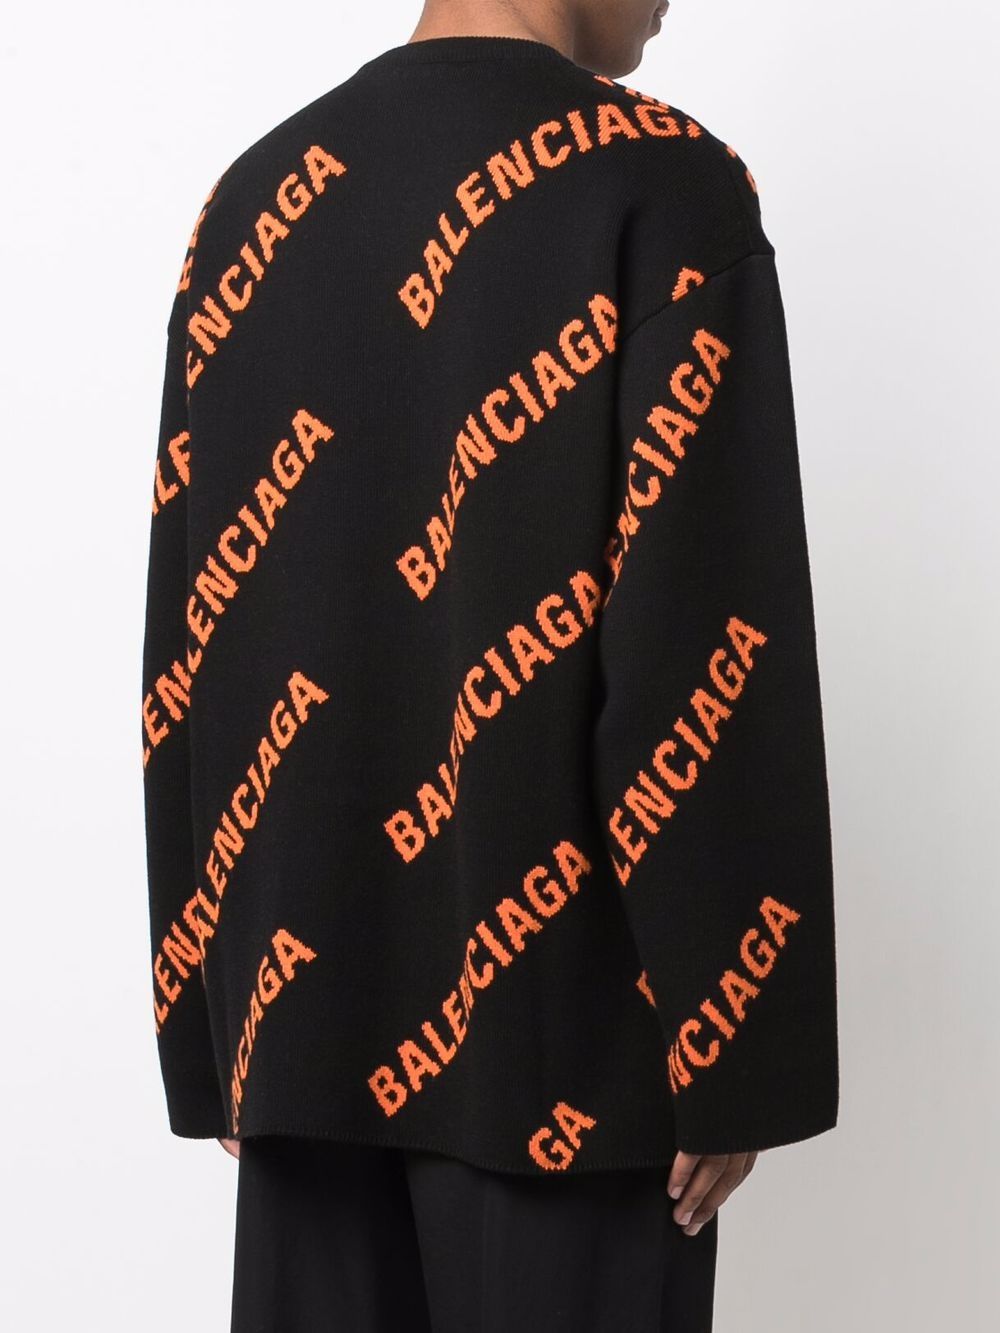 фото Balenciaga джемпер вязки интарсия с логотипом